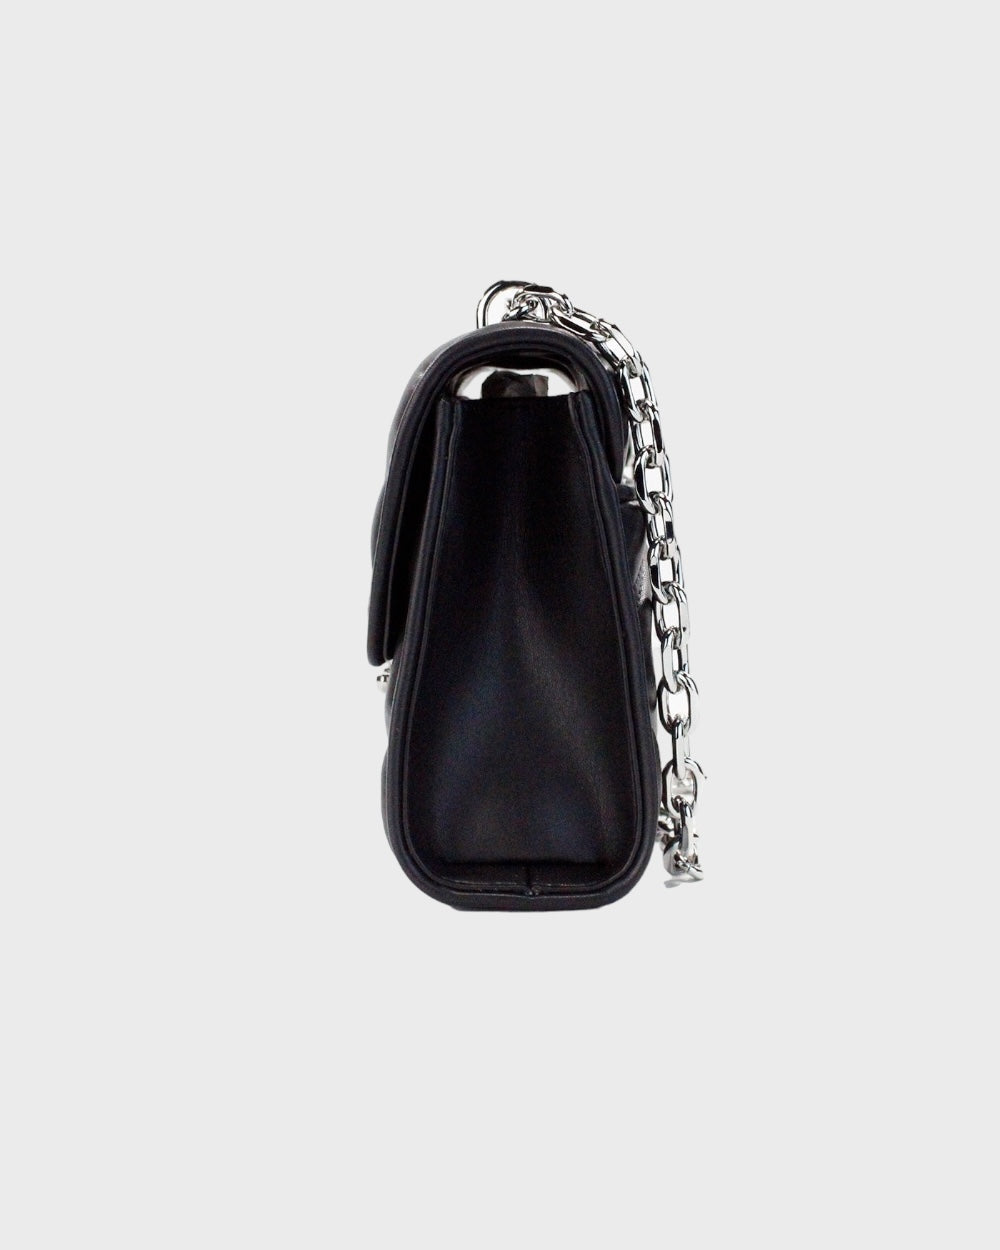 Michael Kors Serena Medium Black Diamond Quilted Faux Leather Flap Shoulder Bag